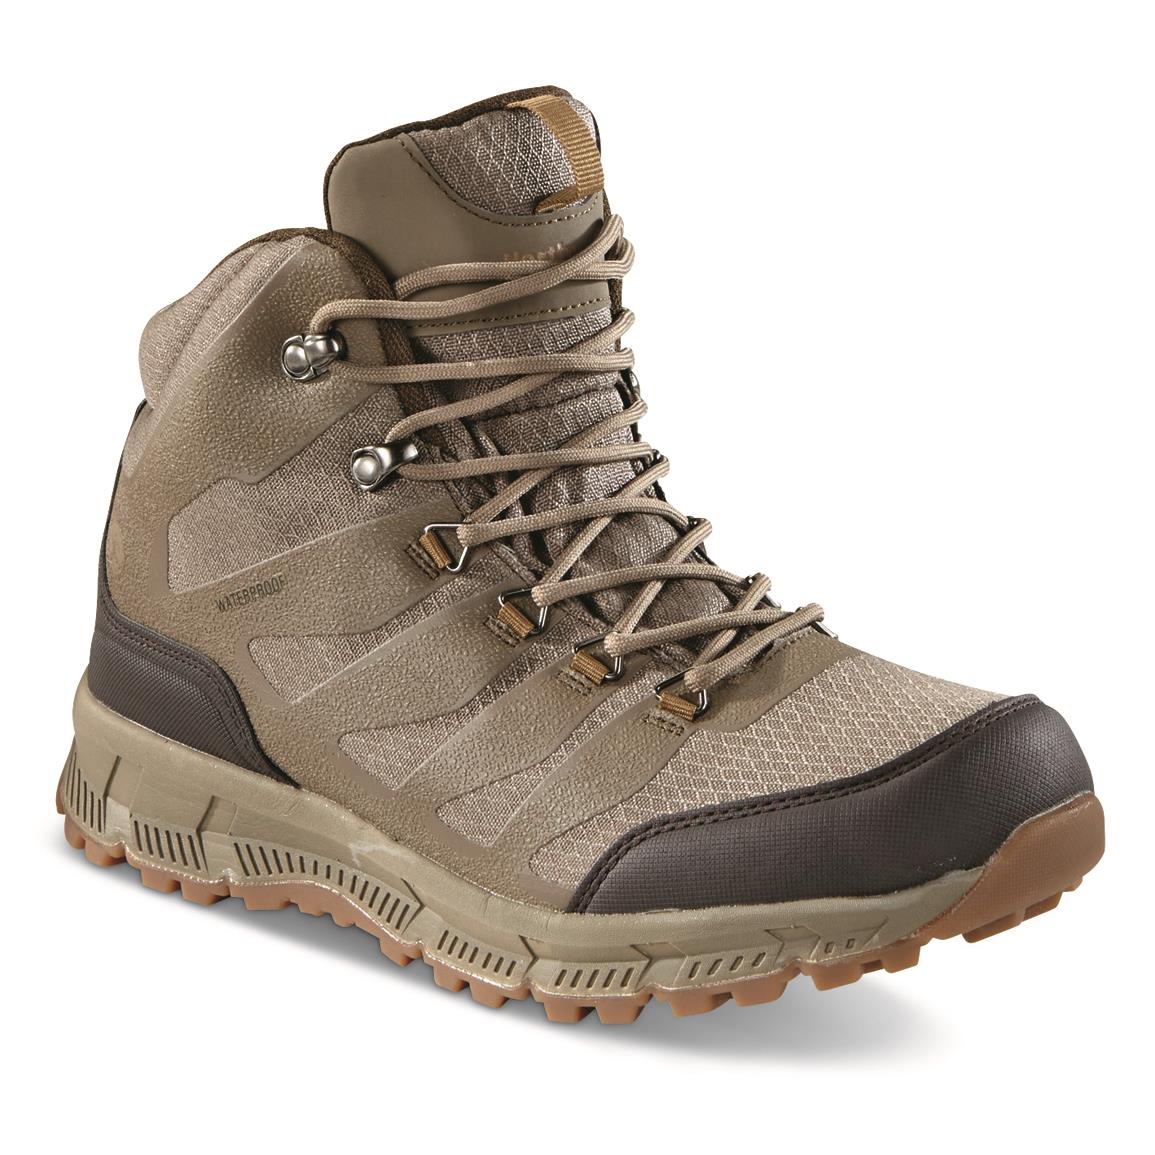 Northside Men's Hargrove Mid Waterproof Hiking Boots, Stone